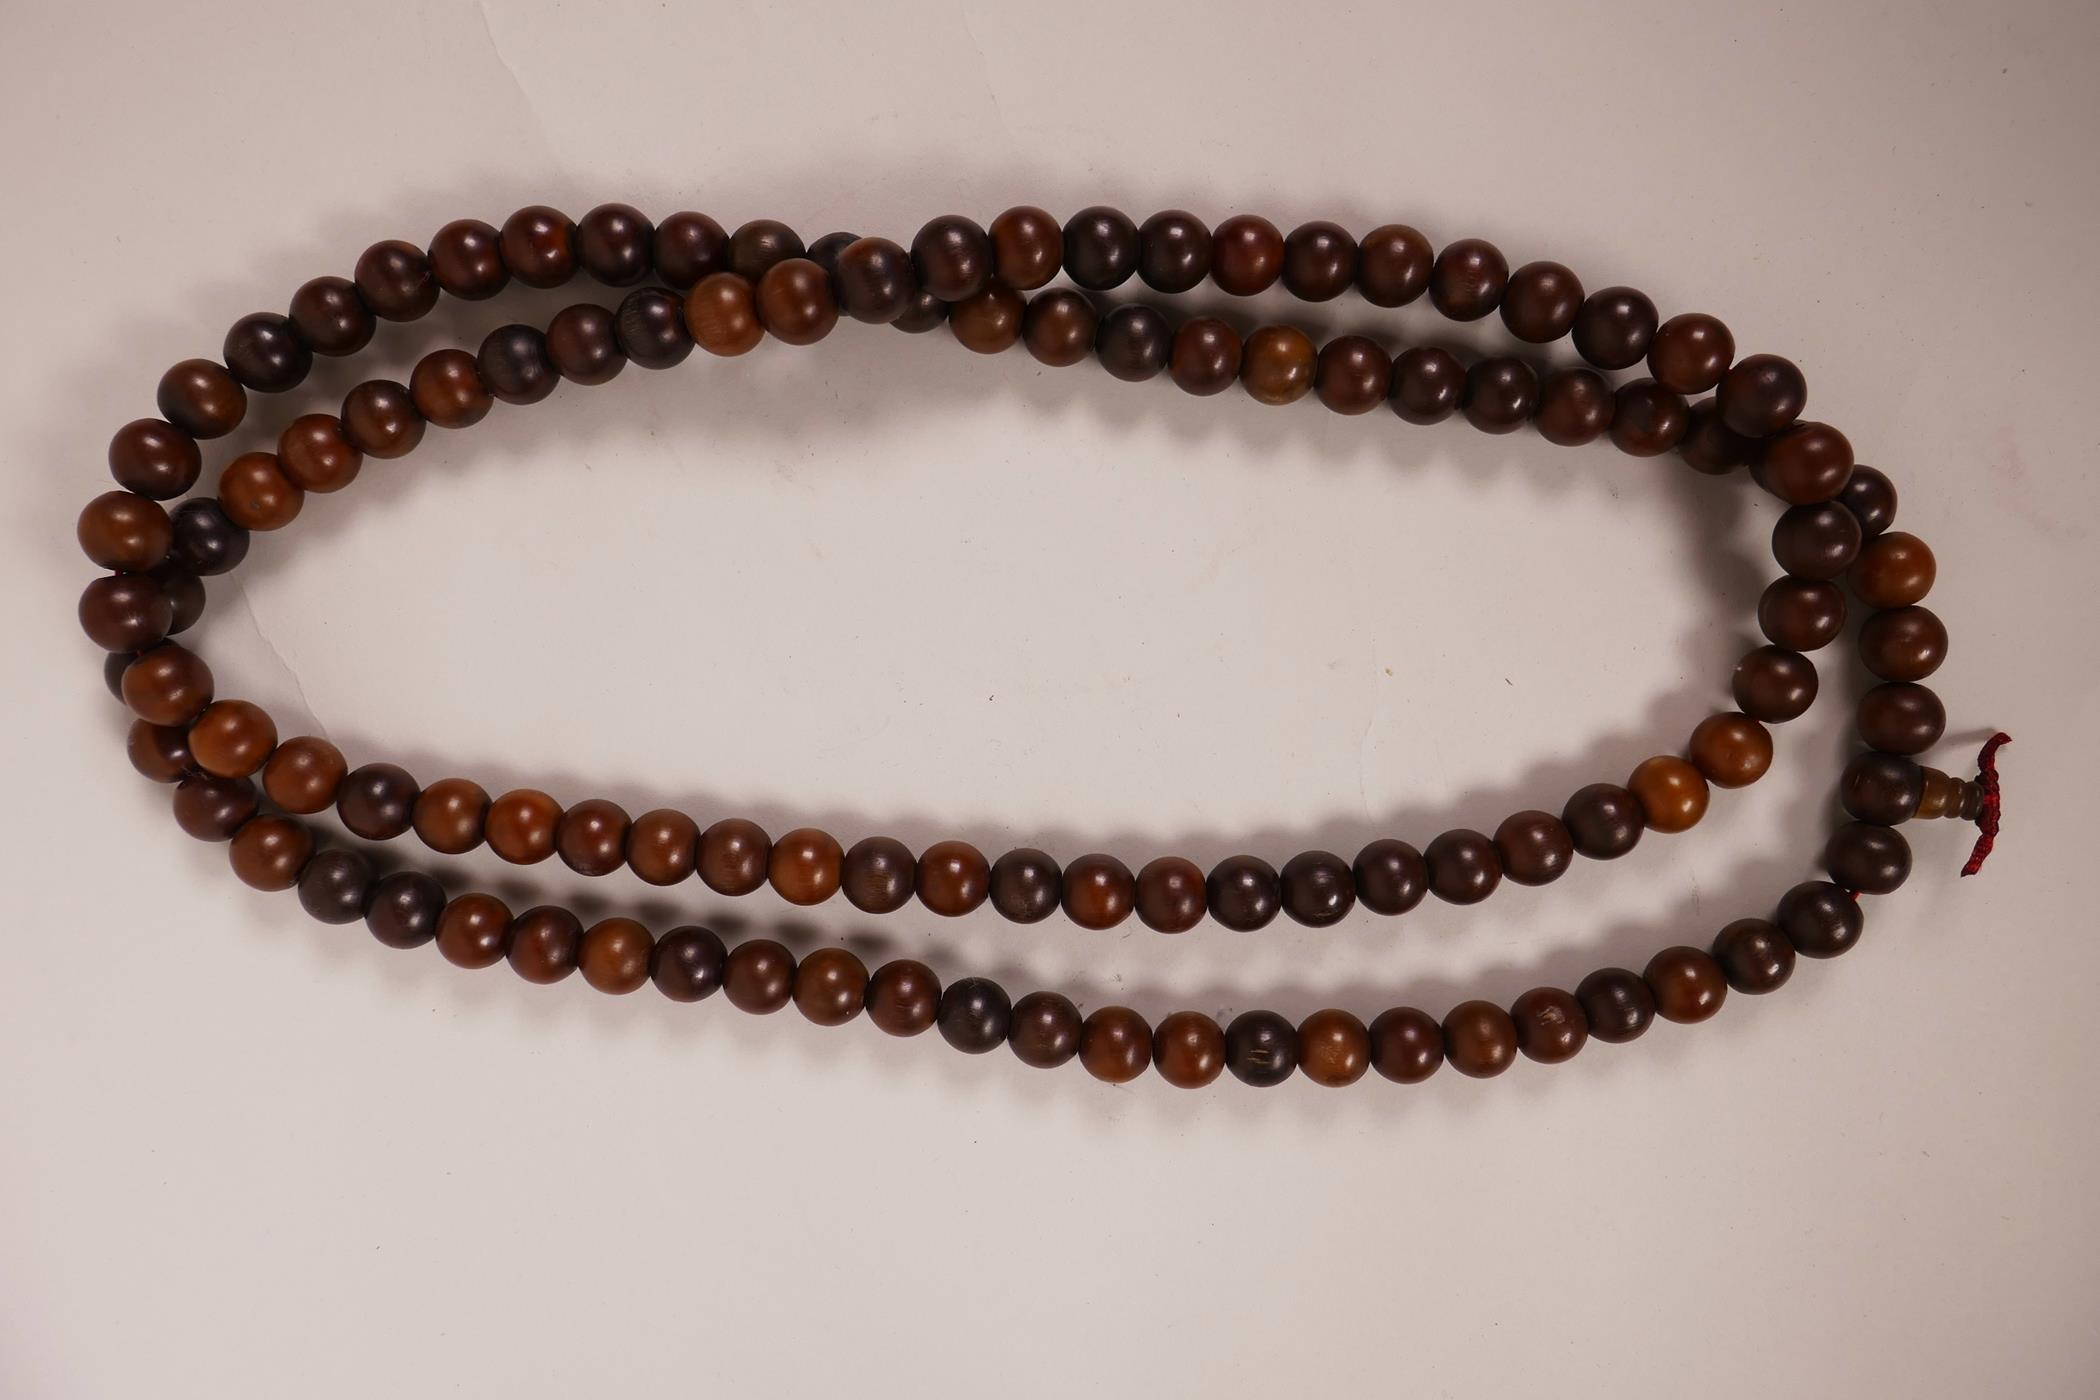 A string of horn beads, 58" long